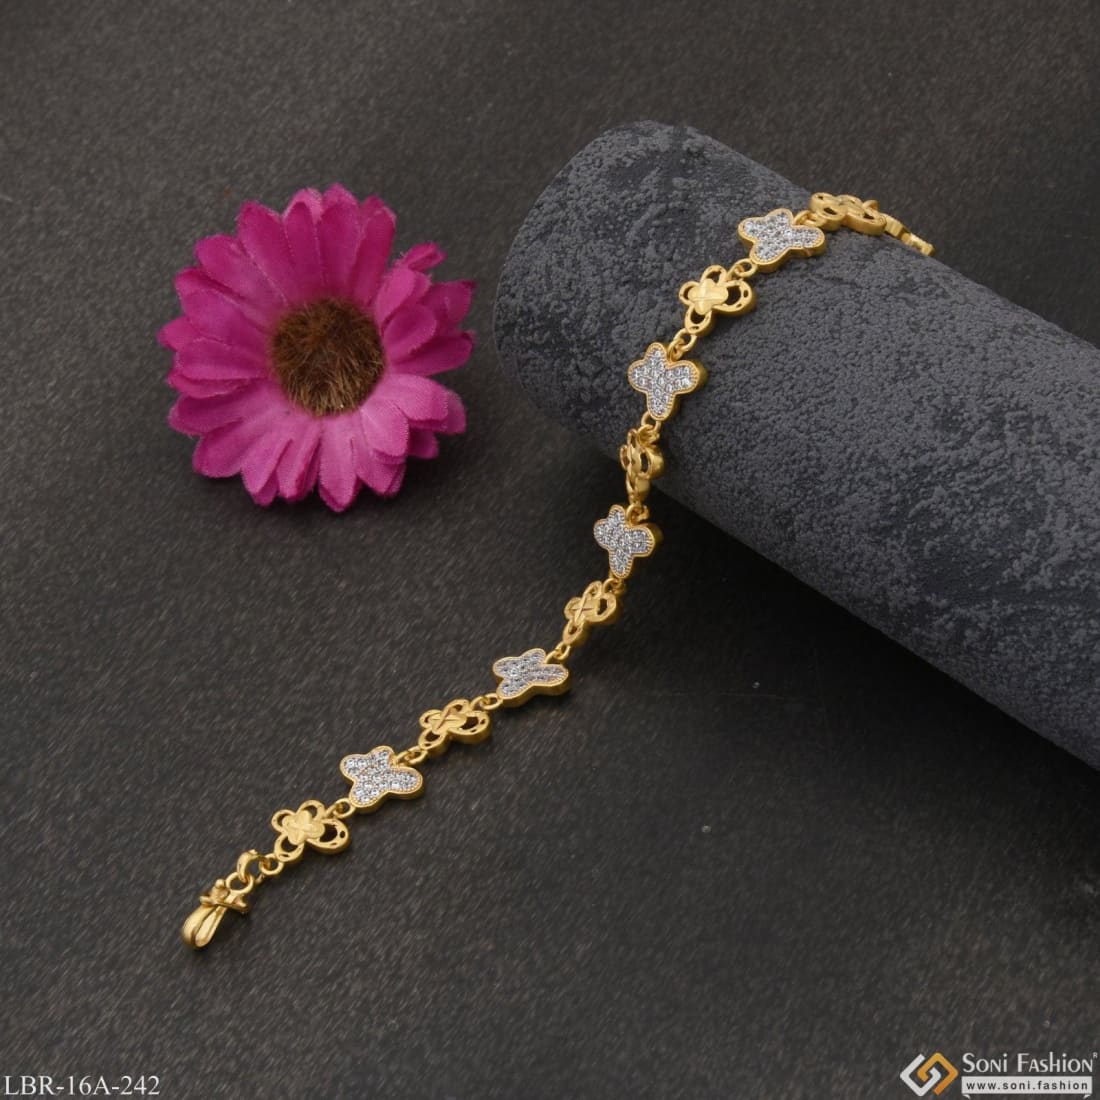 1 Gram Gold Forming Stylish Design Best Quality Nawabi Bracelet for Men -  Style B874 #1gramgoldjewellery … | Bracelets for men, Mens fashion, 1 gram  gold jewellery